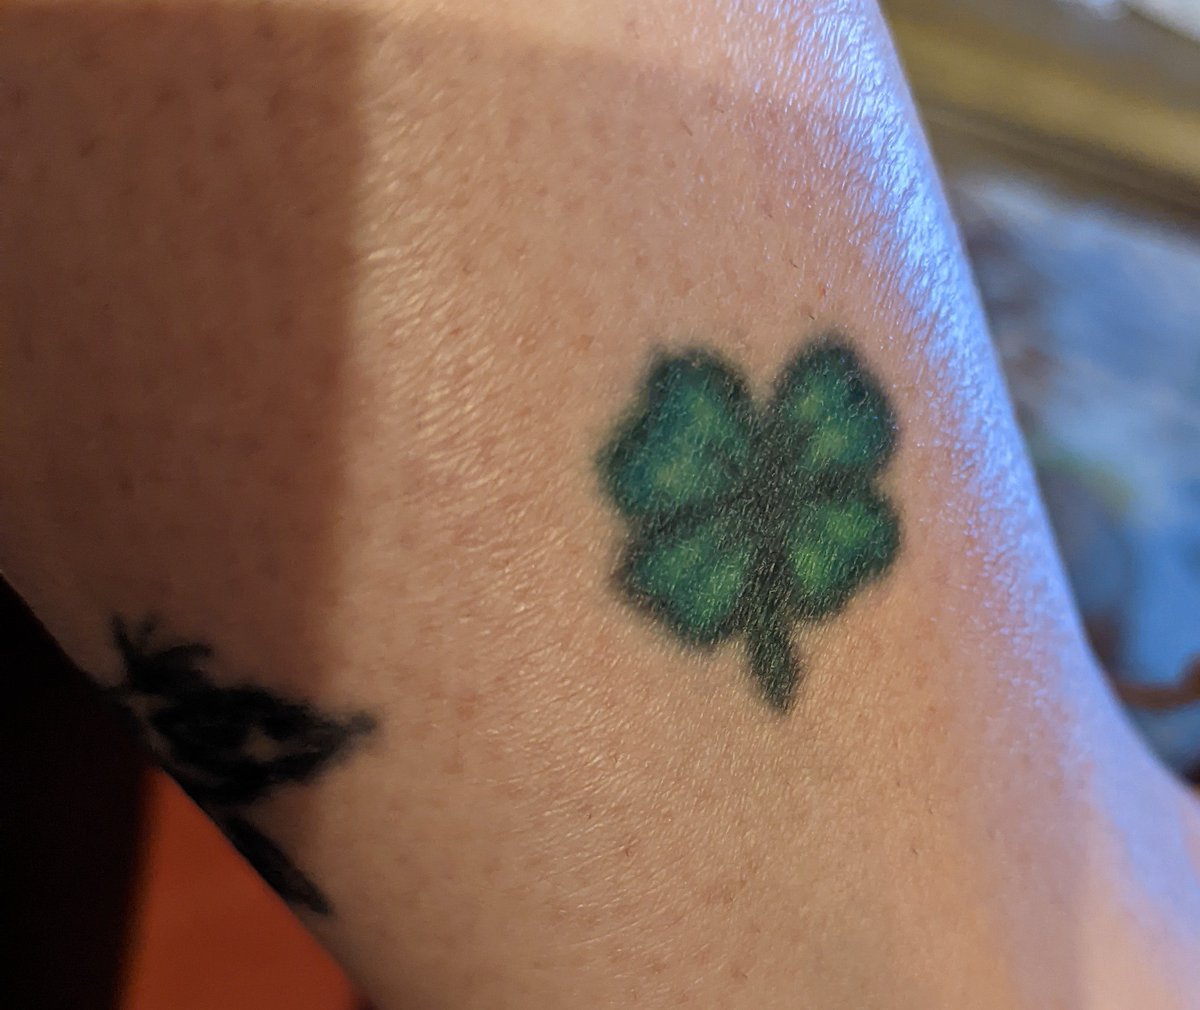 Luckiest Four Leaf Clover Tattoos - Tattoo Glee